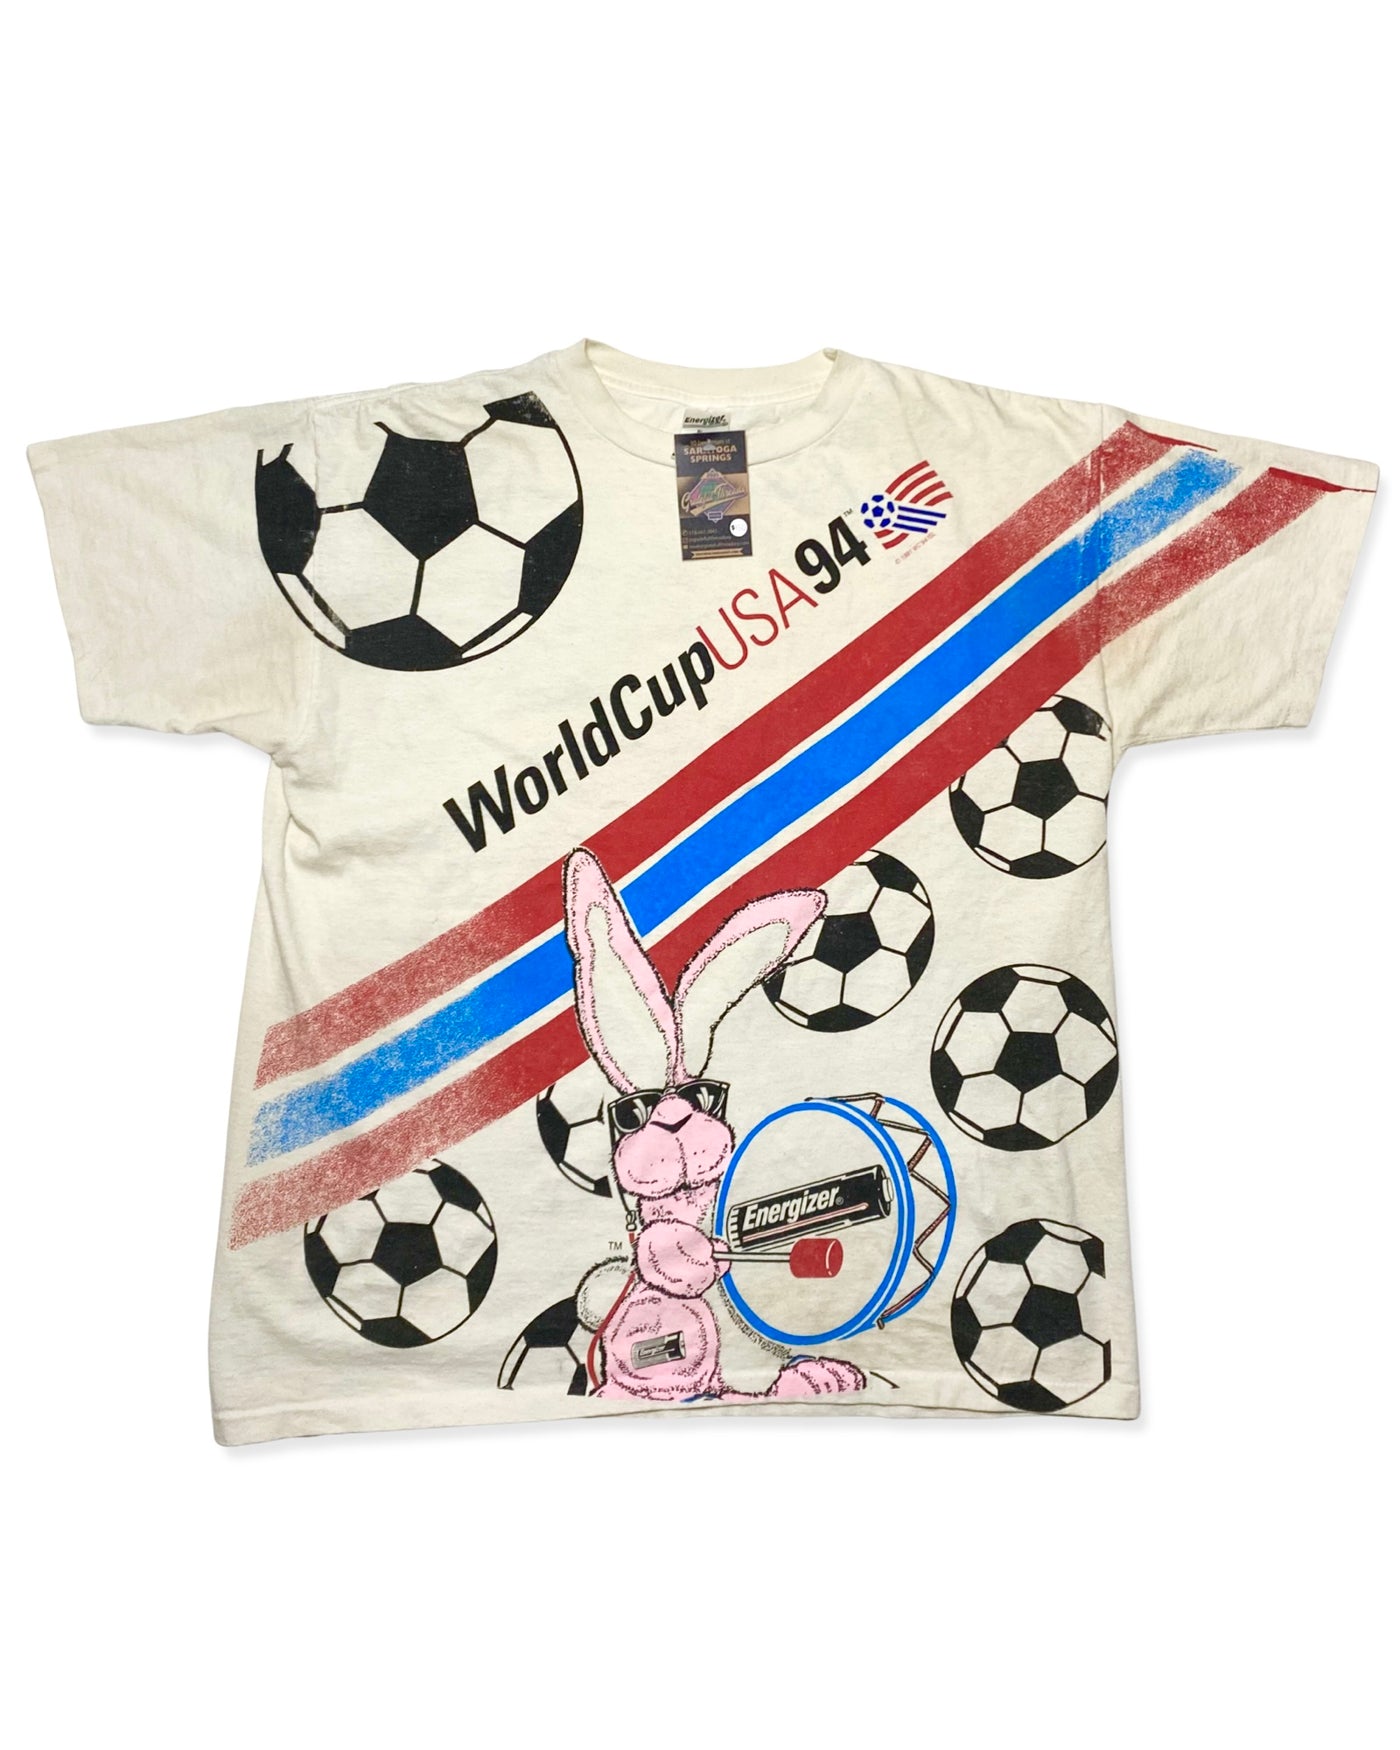 Vintage 1994 USA World Cup Energizer Promo T-Shirt